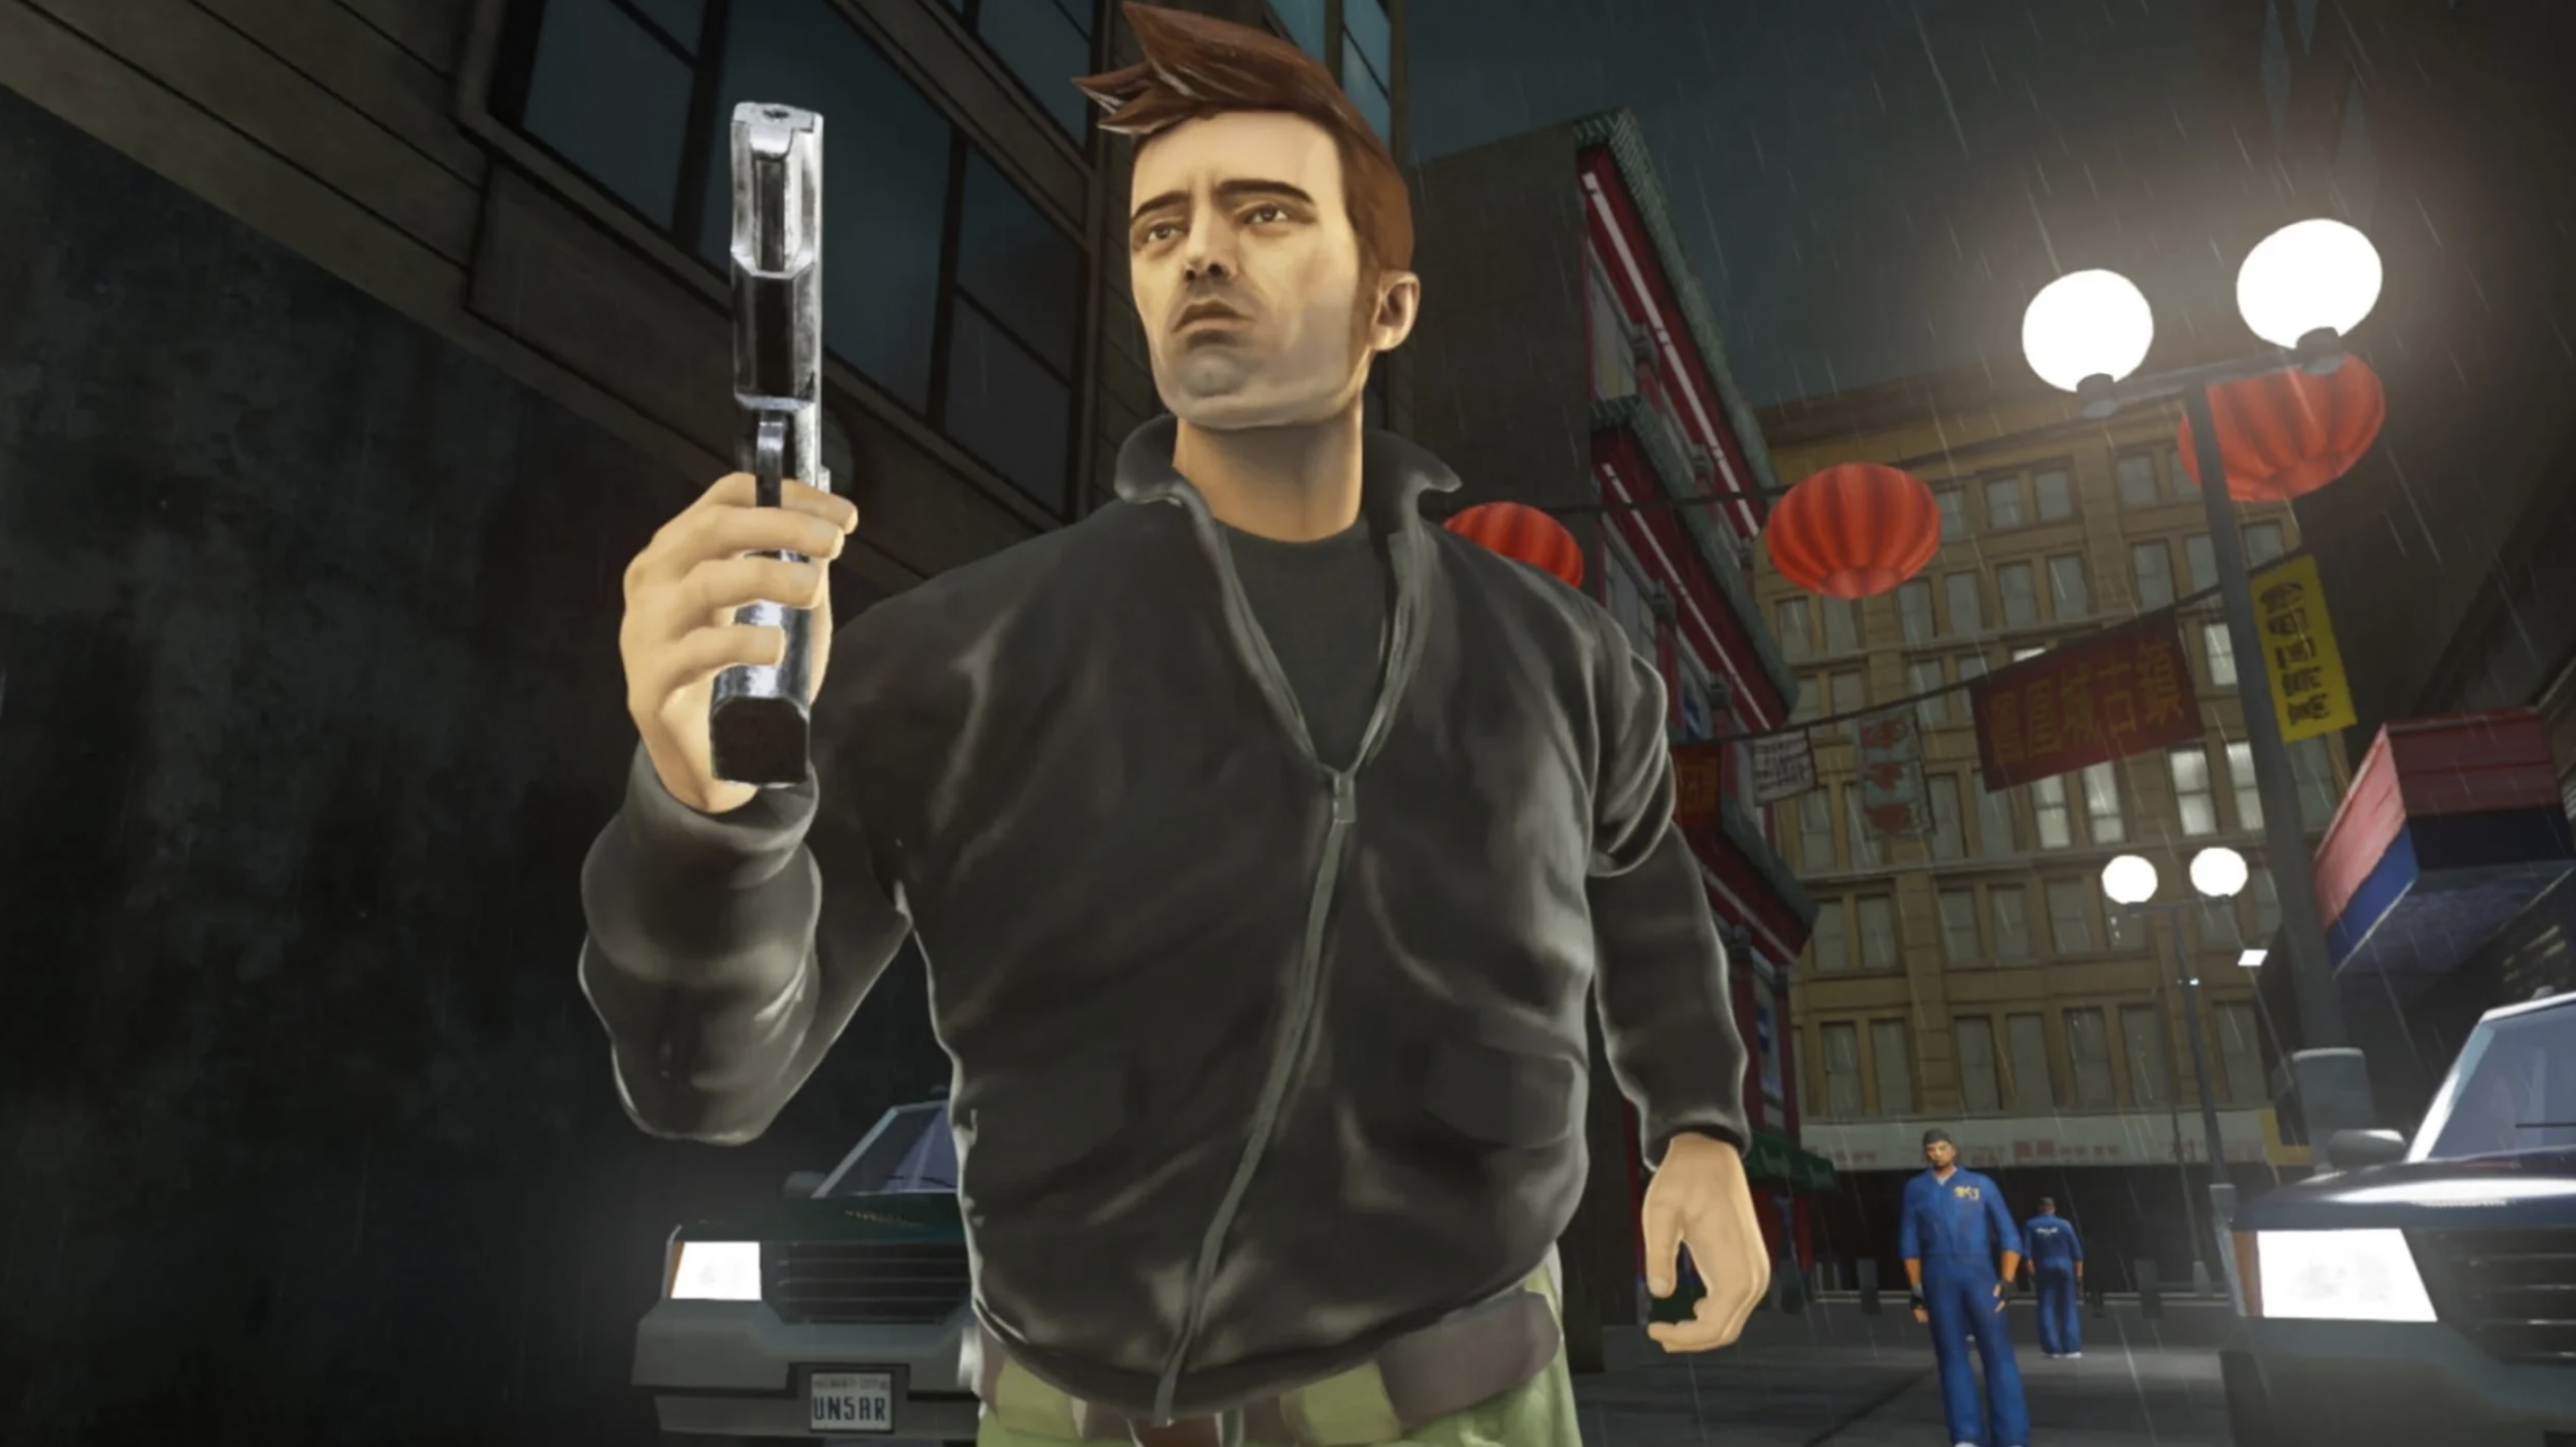 GTA Trilogy remasters release on Netflix for mobile - RockstarINTEL